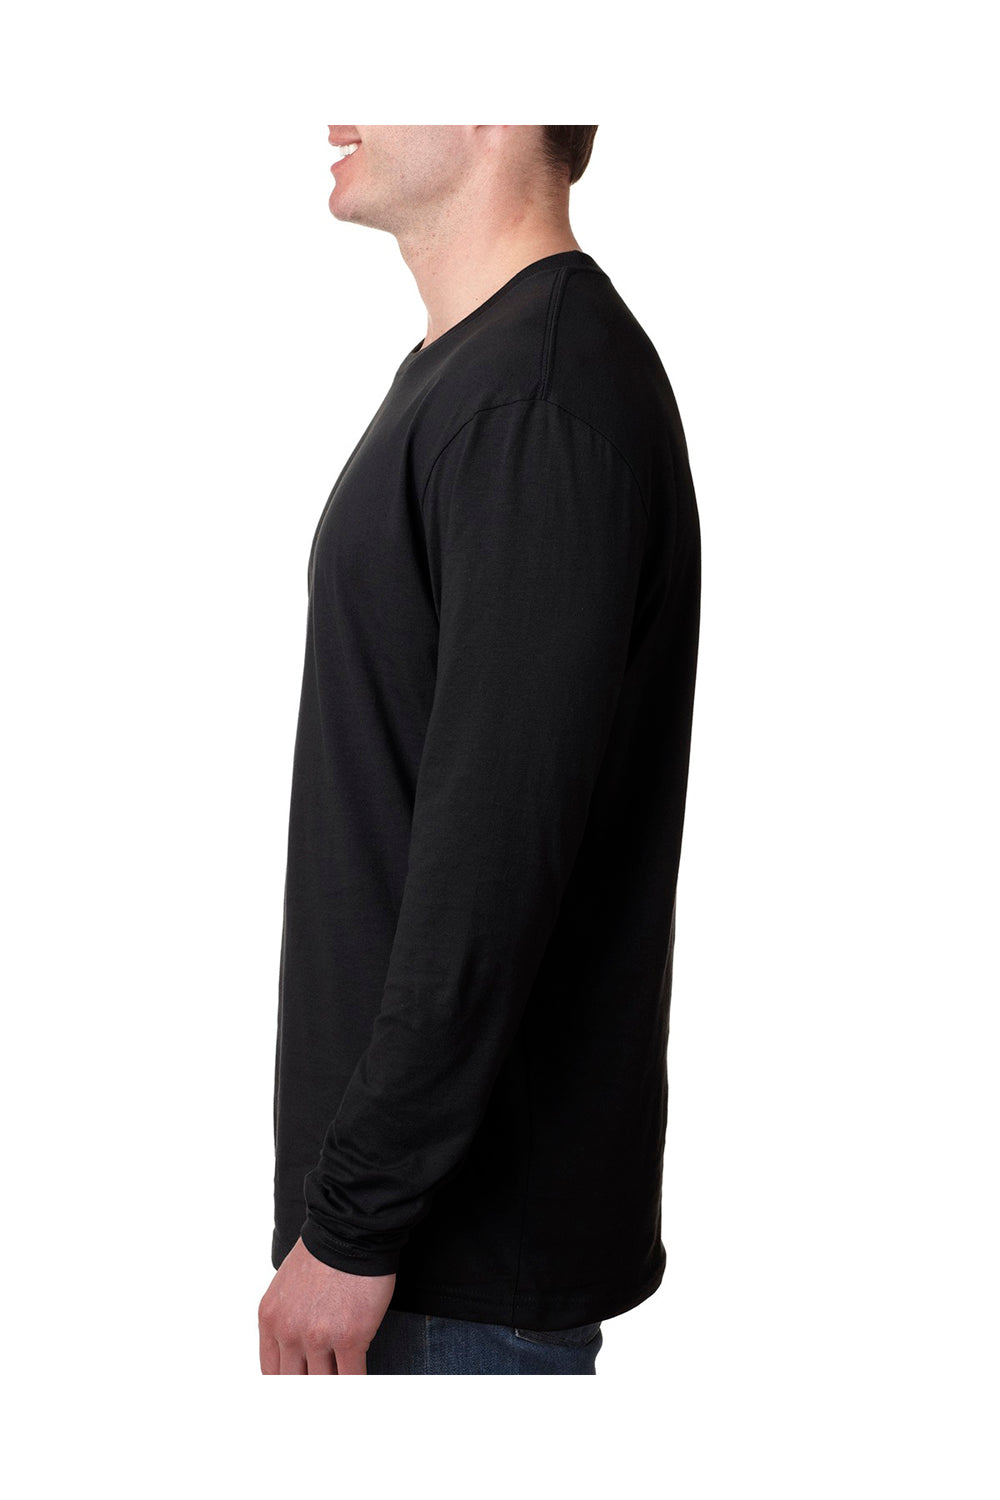 Next Level N3601 Mens Fine Jersey Long Sleeve Crewneck T-Shirt Black Side